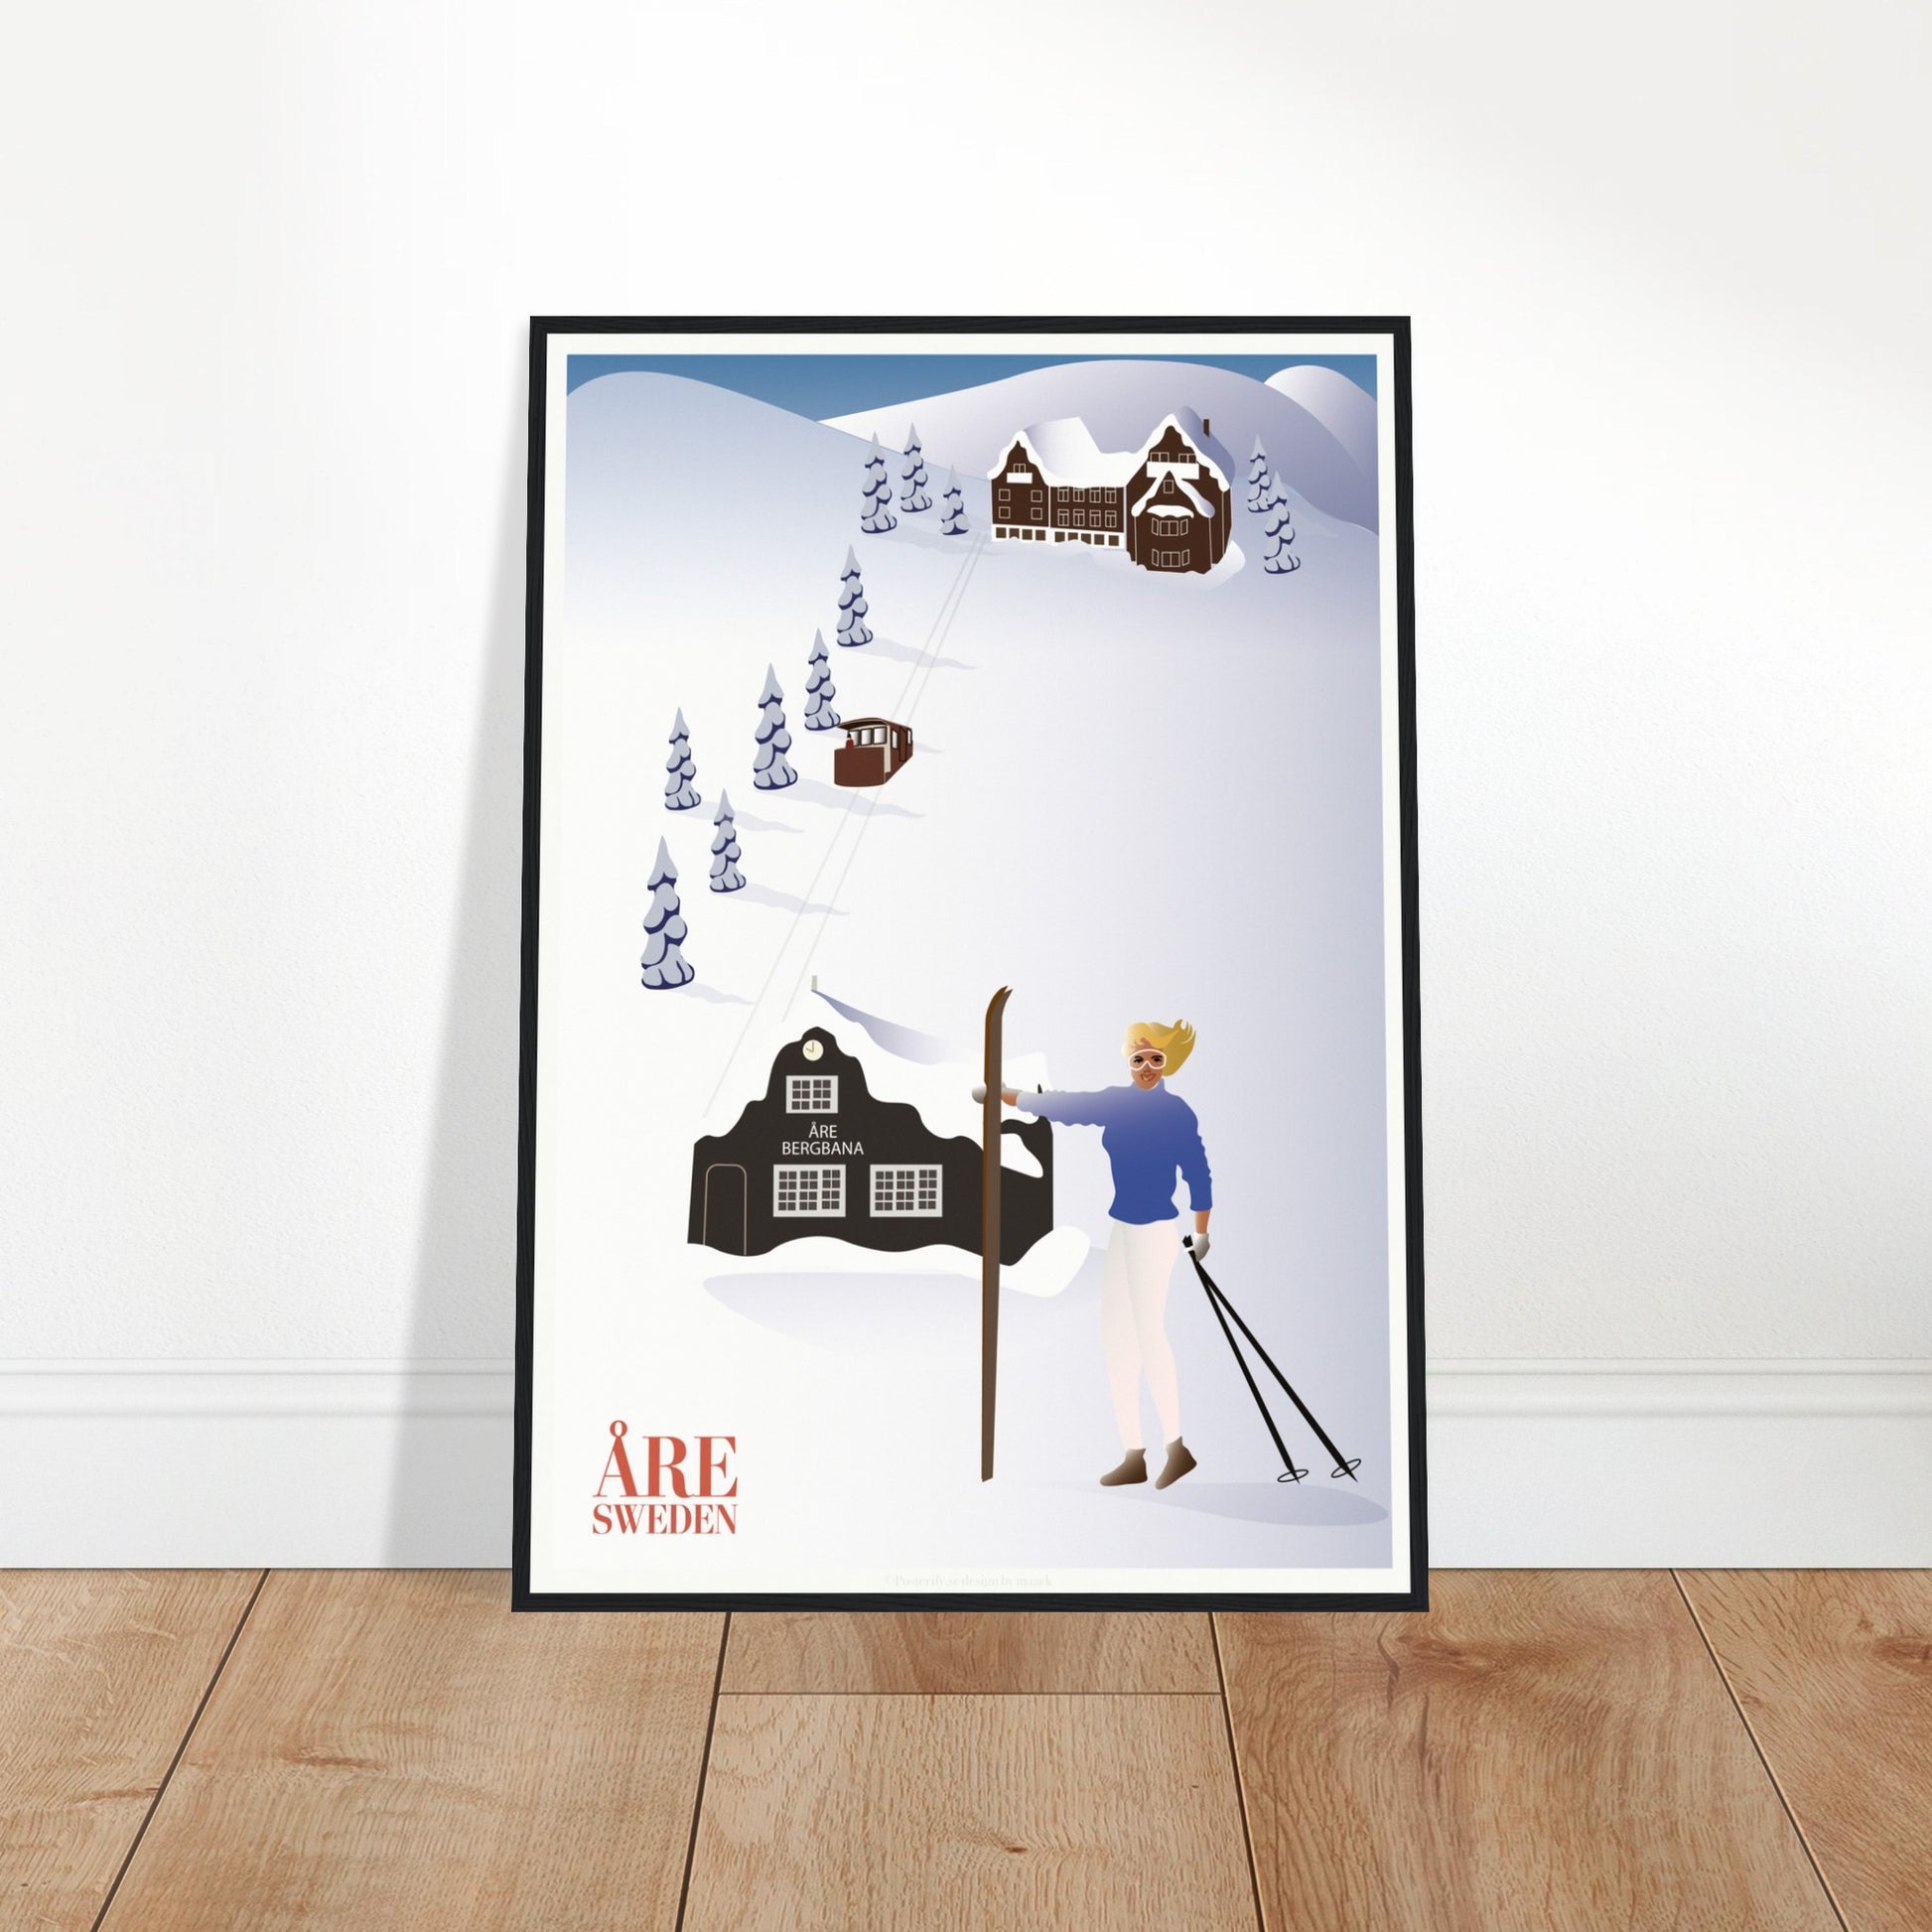 Åre Bergbana, Sweden, by Posterify Design Poster on Premium Matte Paper - Posterify